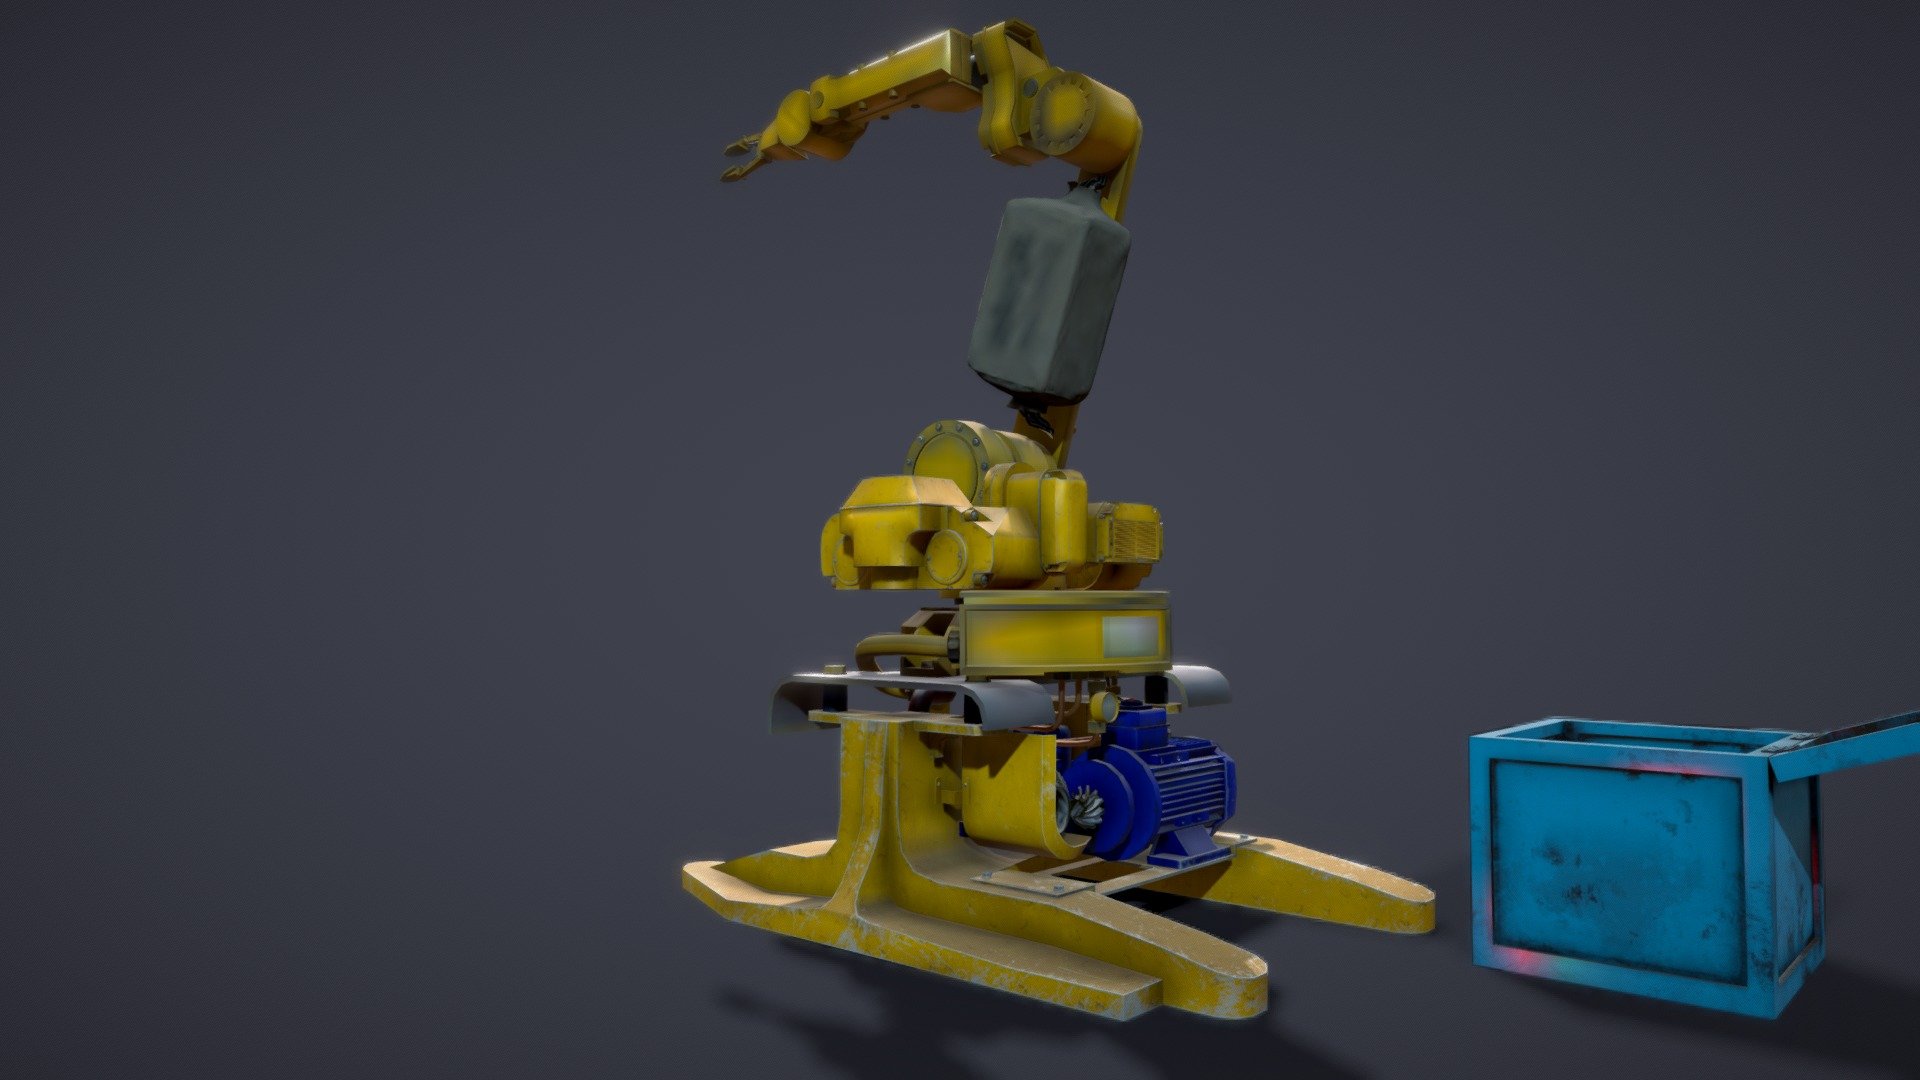 Animated Industrial Manipulator - Robotic Arm